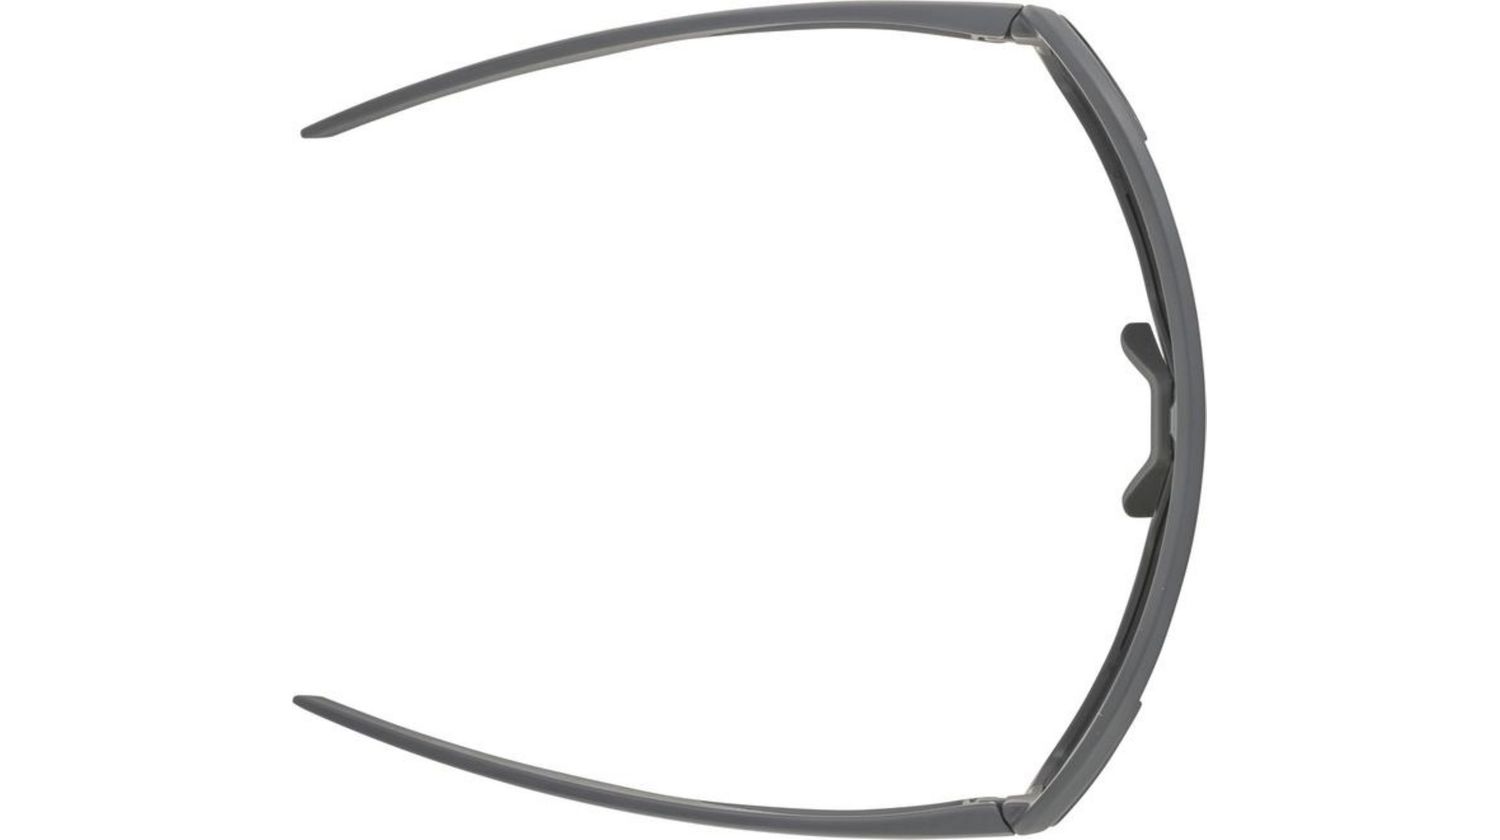 Alpina Bonfire Sportbrille midnight-grey matt/mirror green one size